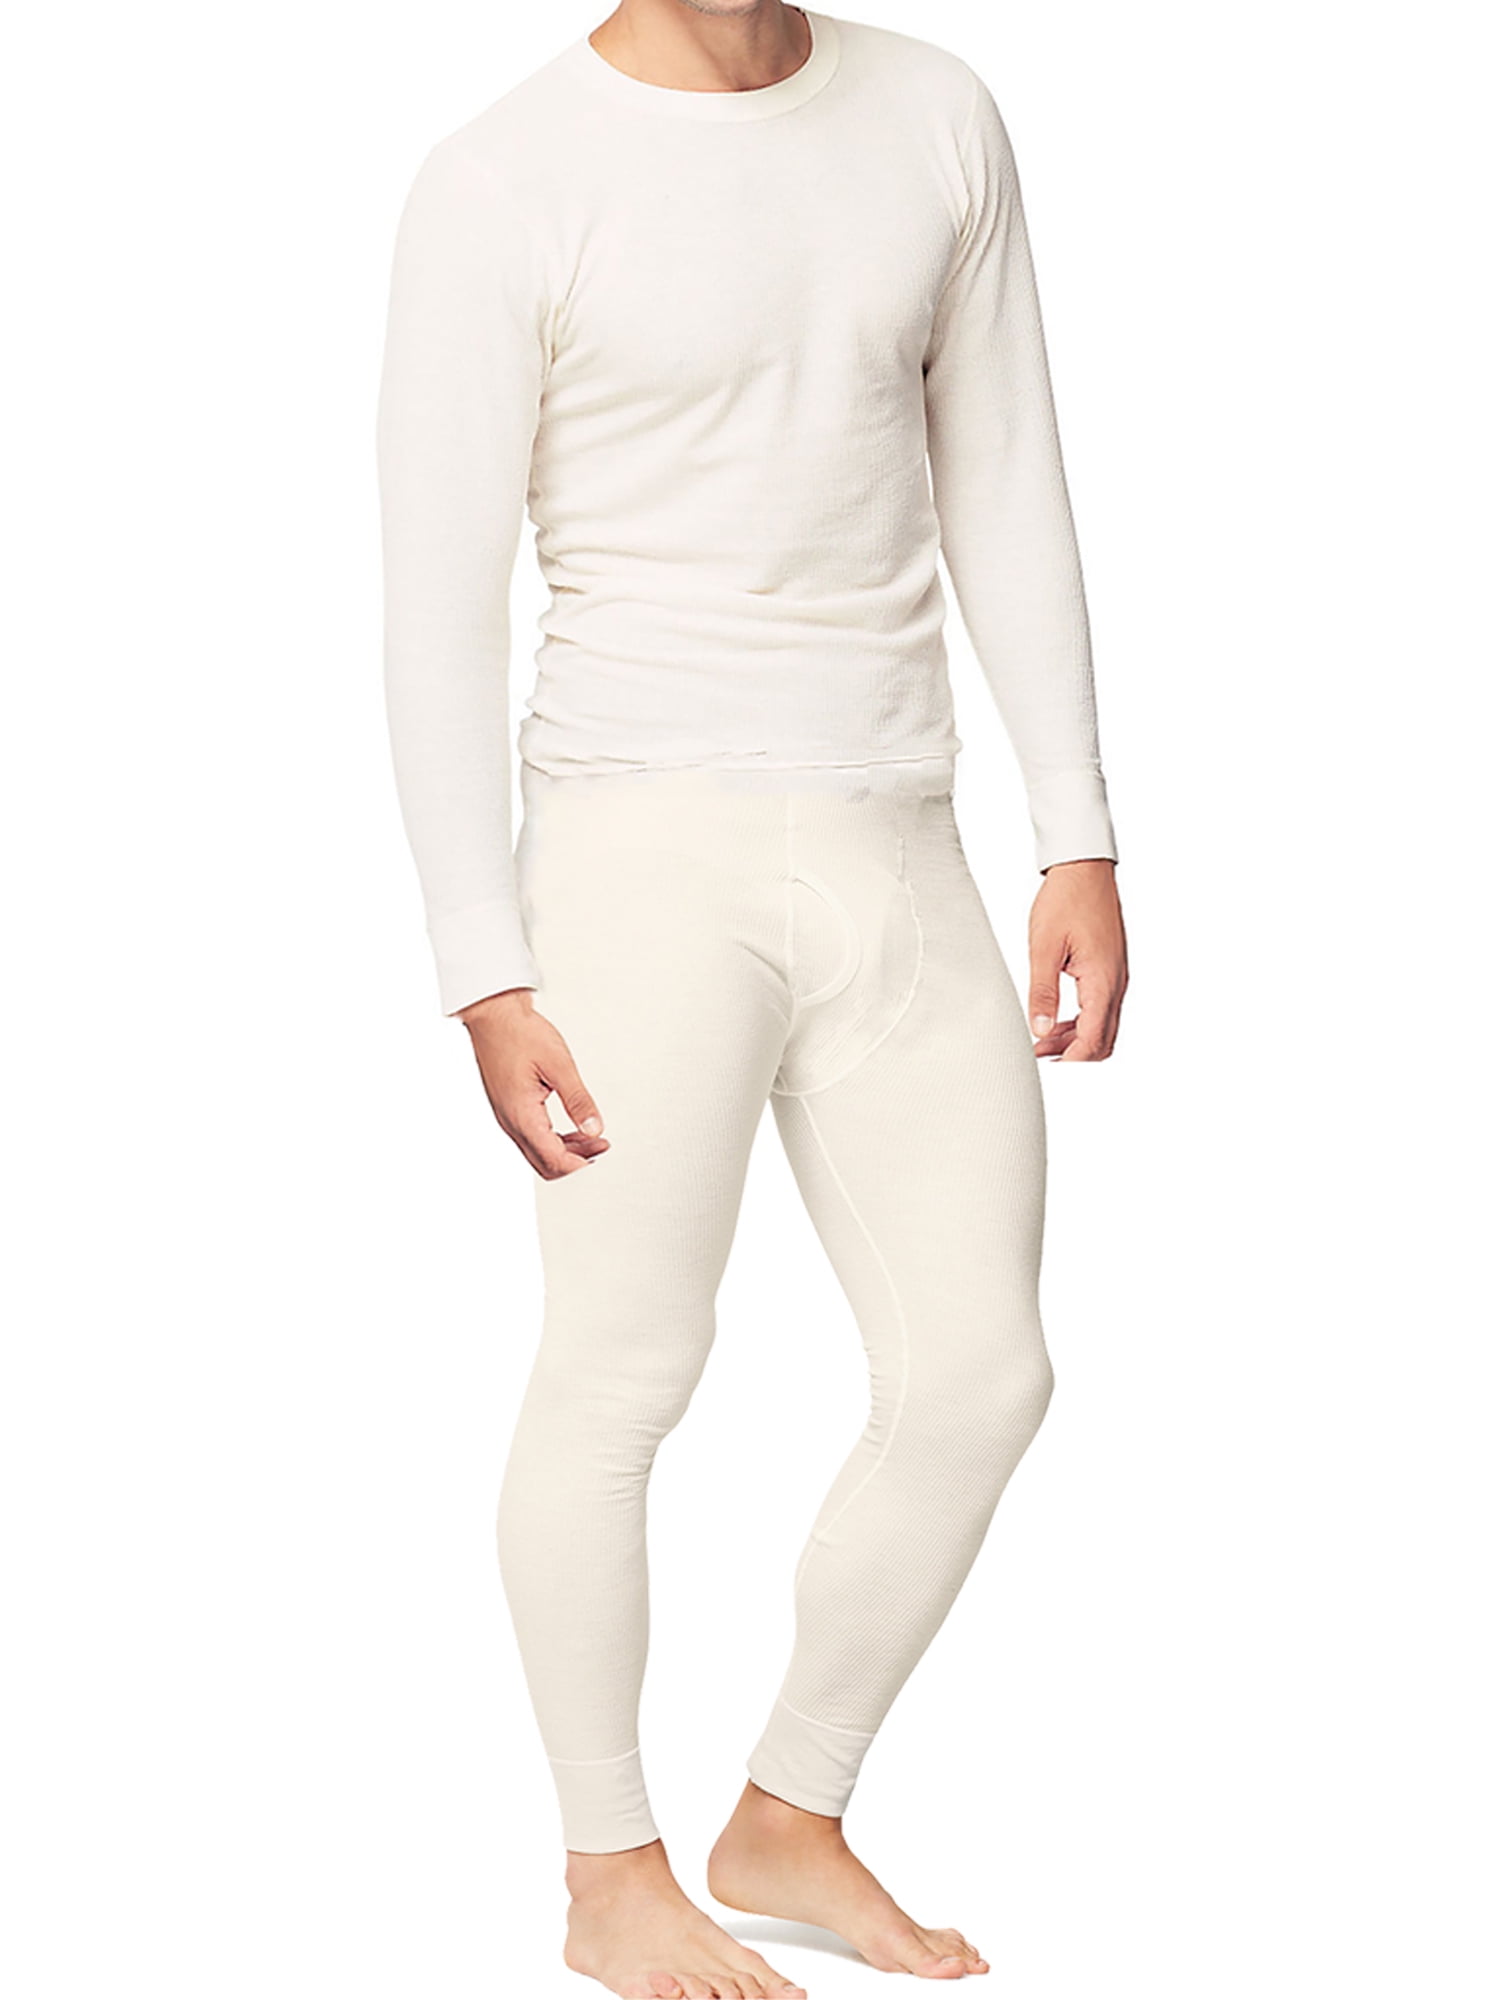 Long Sleeved Top Men's White Winter Thermal Long Johns Pants Trousers Leggings 